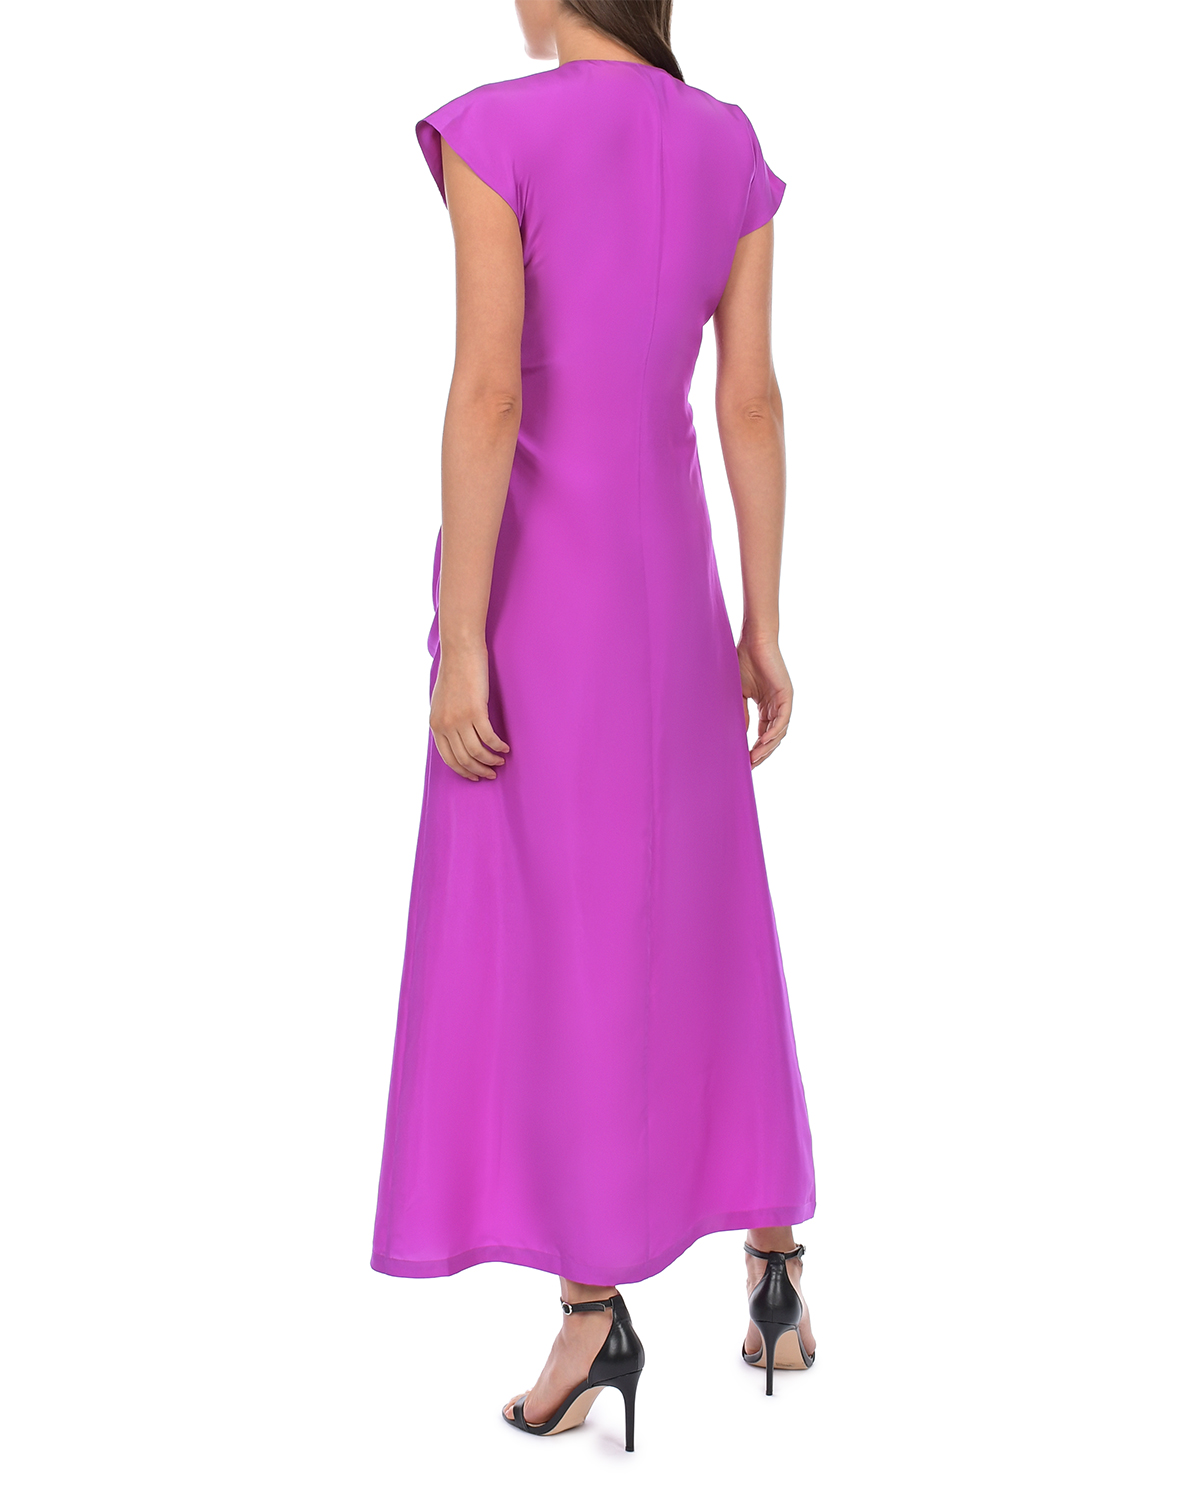 Шелковое платье цвета фуксии ROHE, размер 42 - фото 4